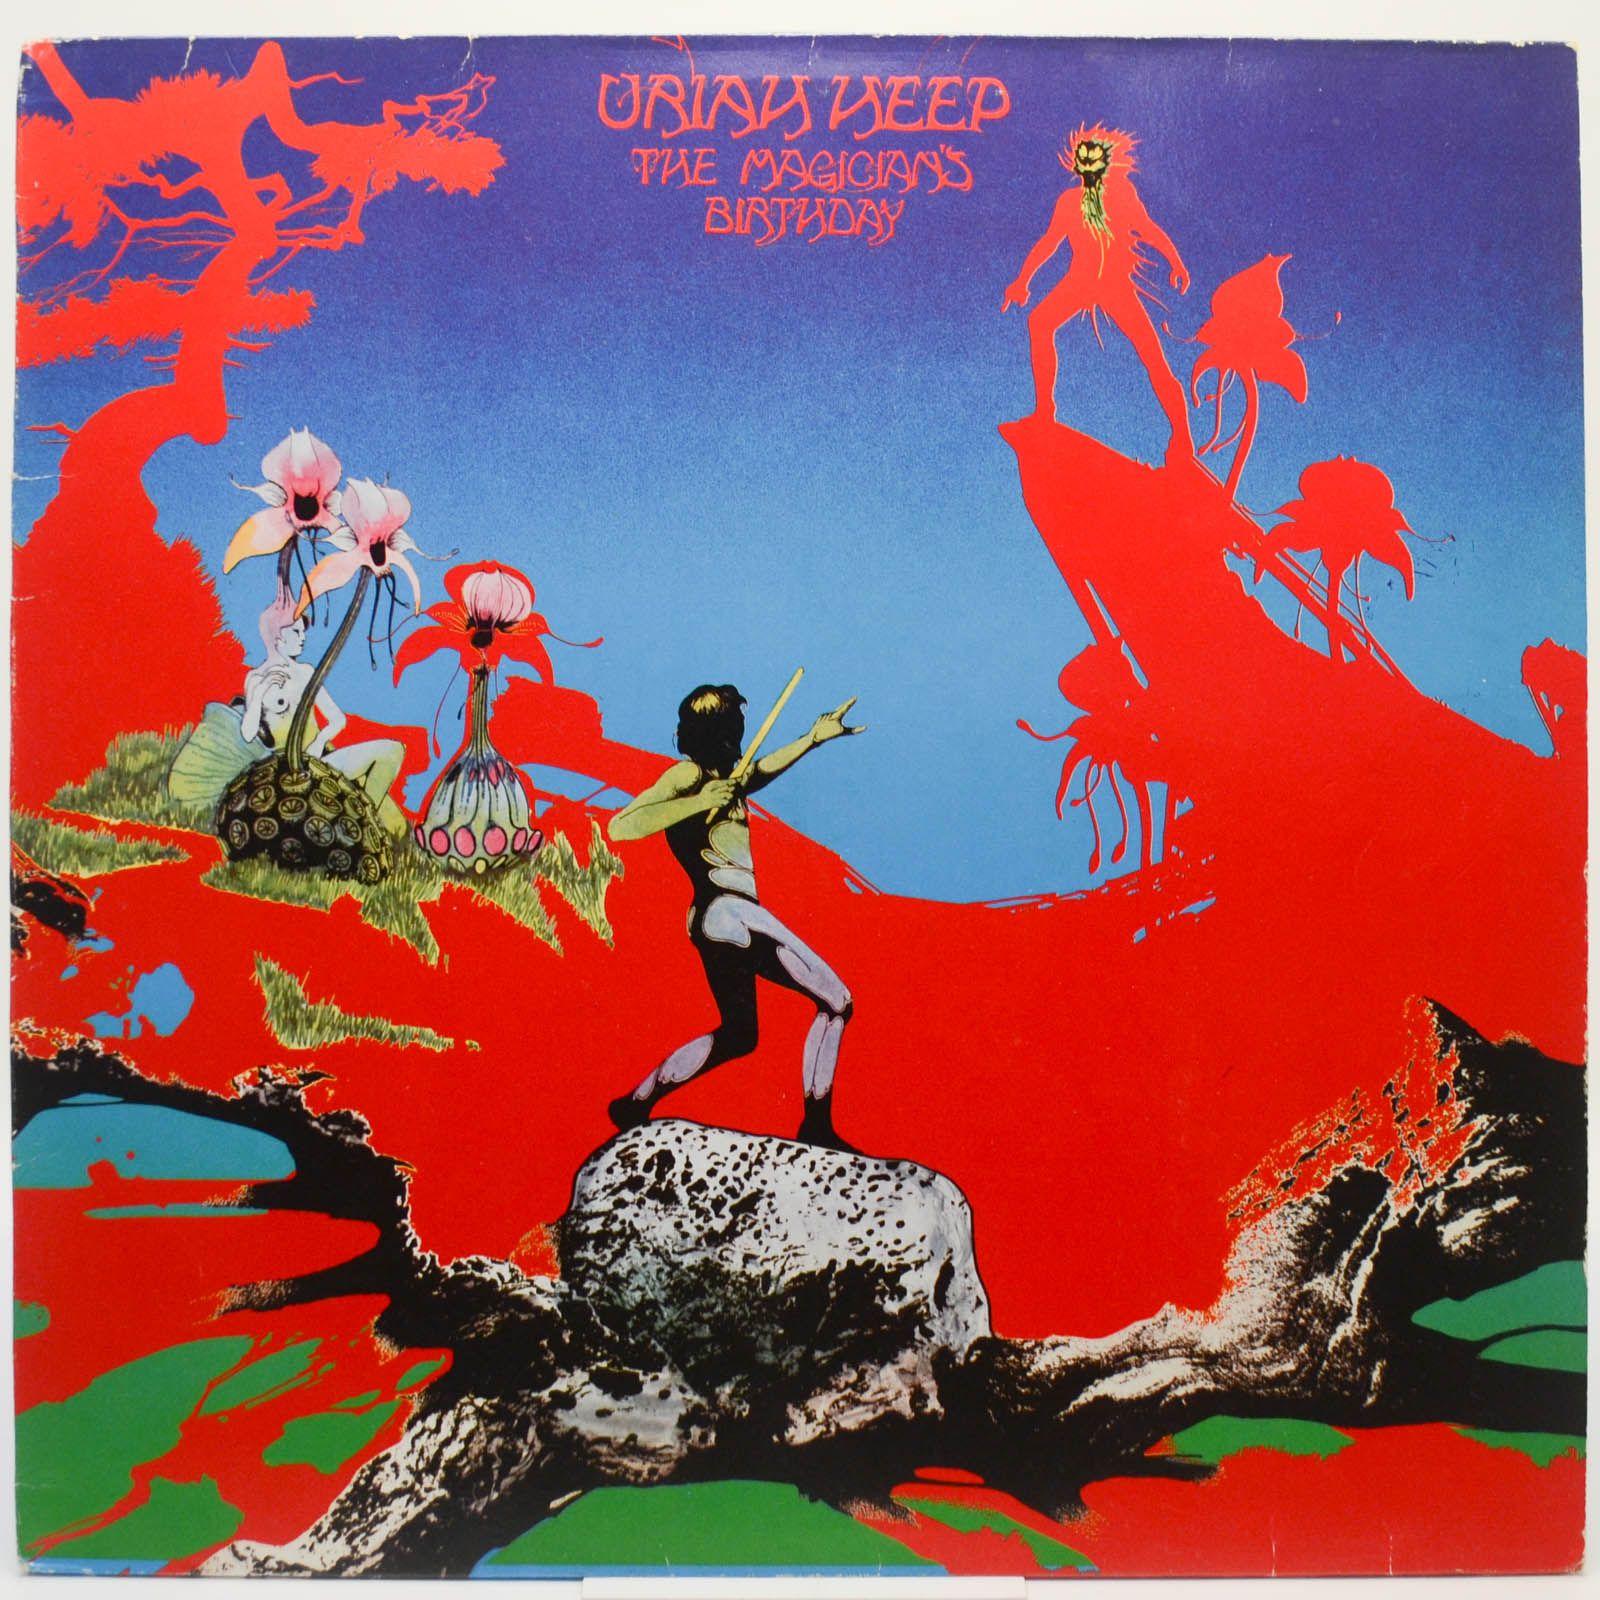 Uriah Heep — The Magician's Birthday, 1972